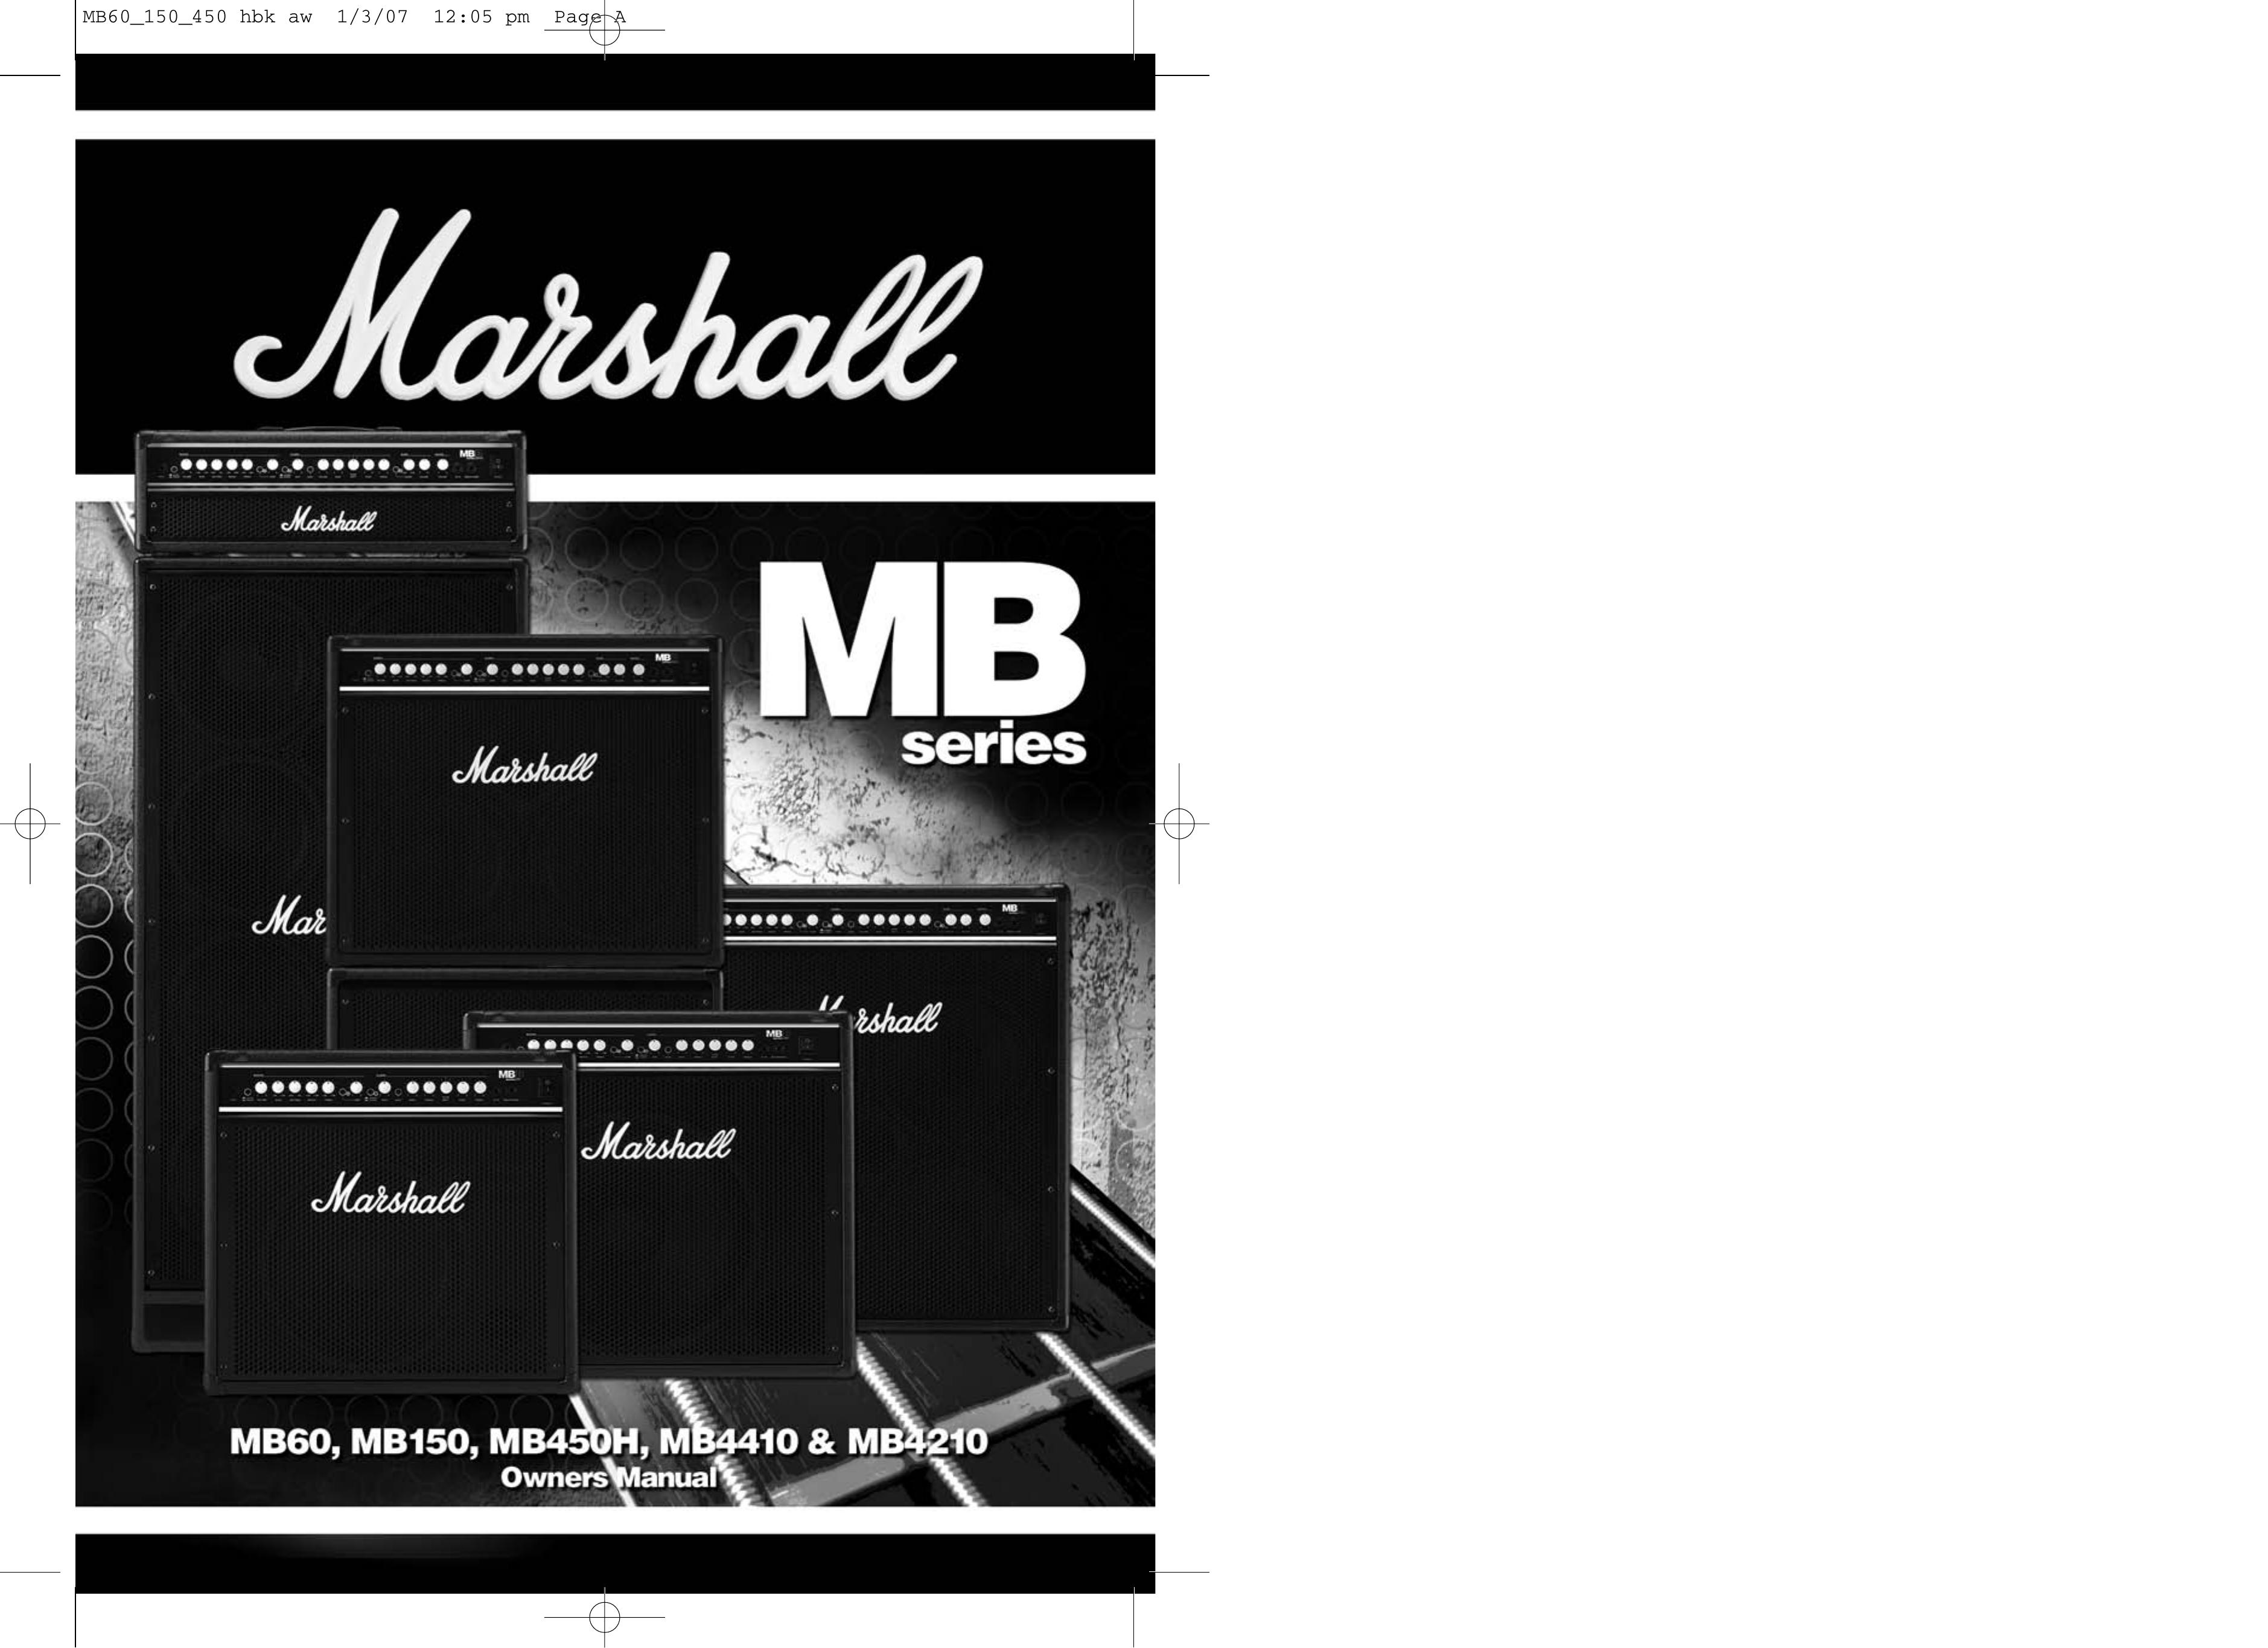 Marshall Amplification MB4410 Musical Instrument Amplifier User Manual